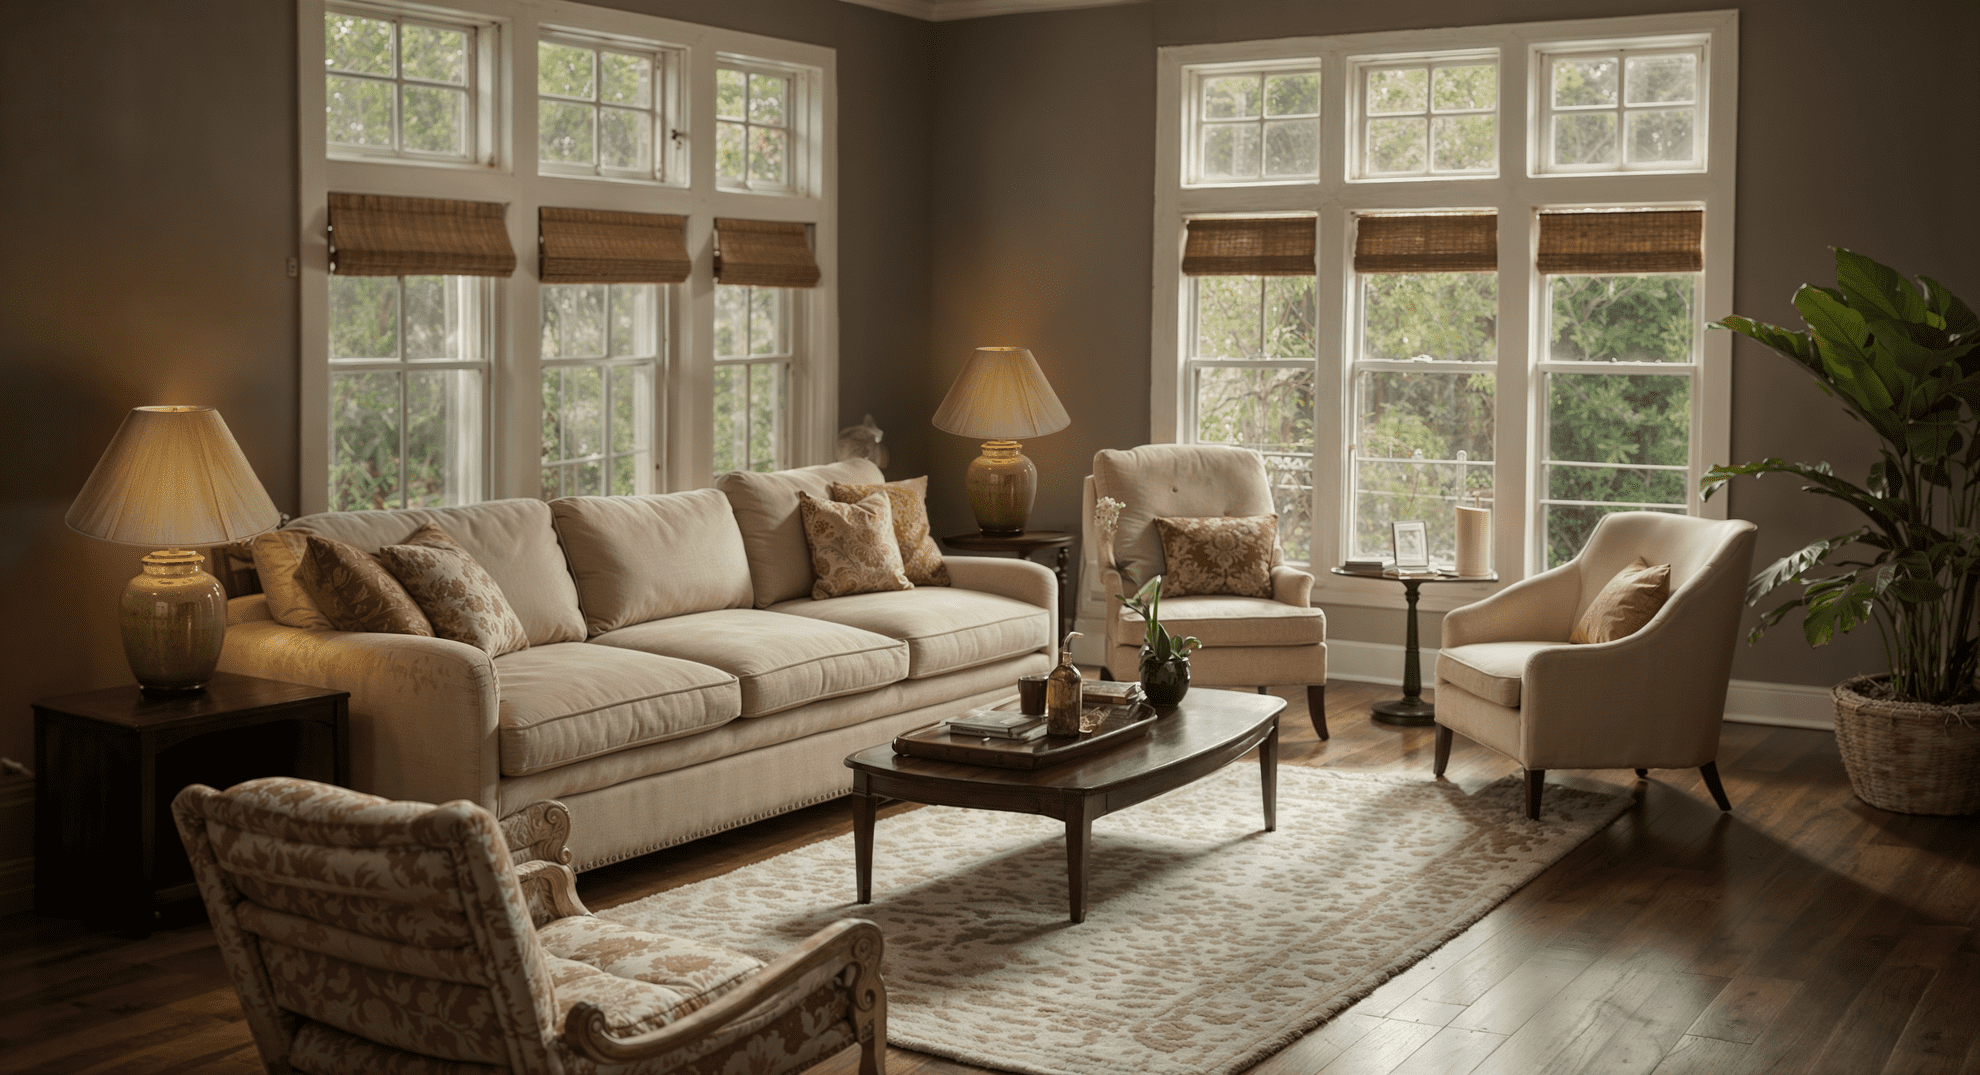 White String Lamp Shades in an elegant living room